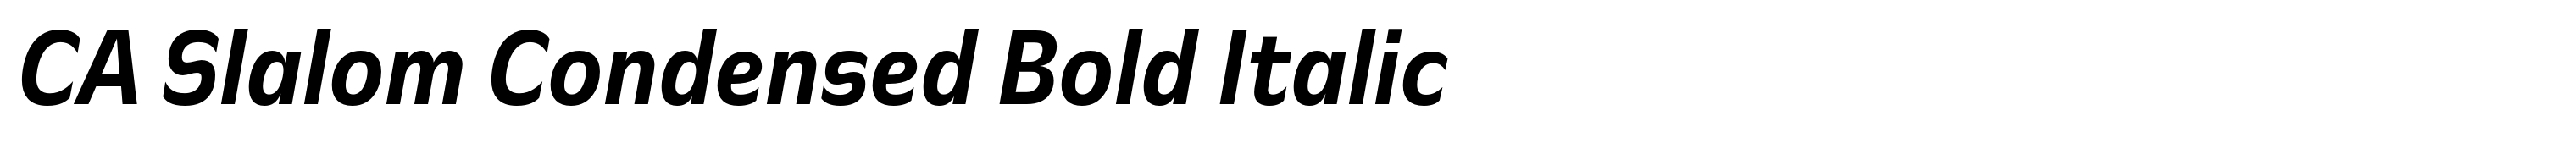 CA Slalom Condensed Bold Italic